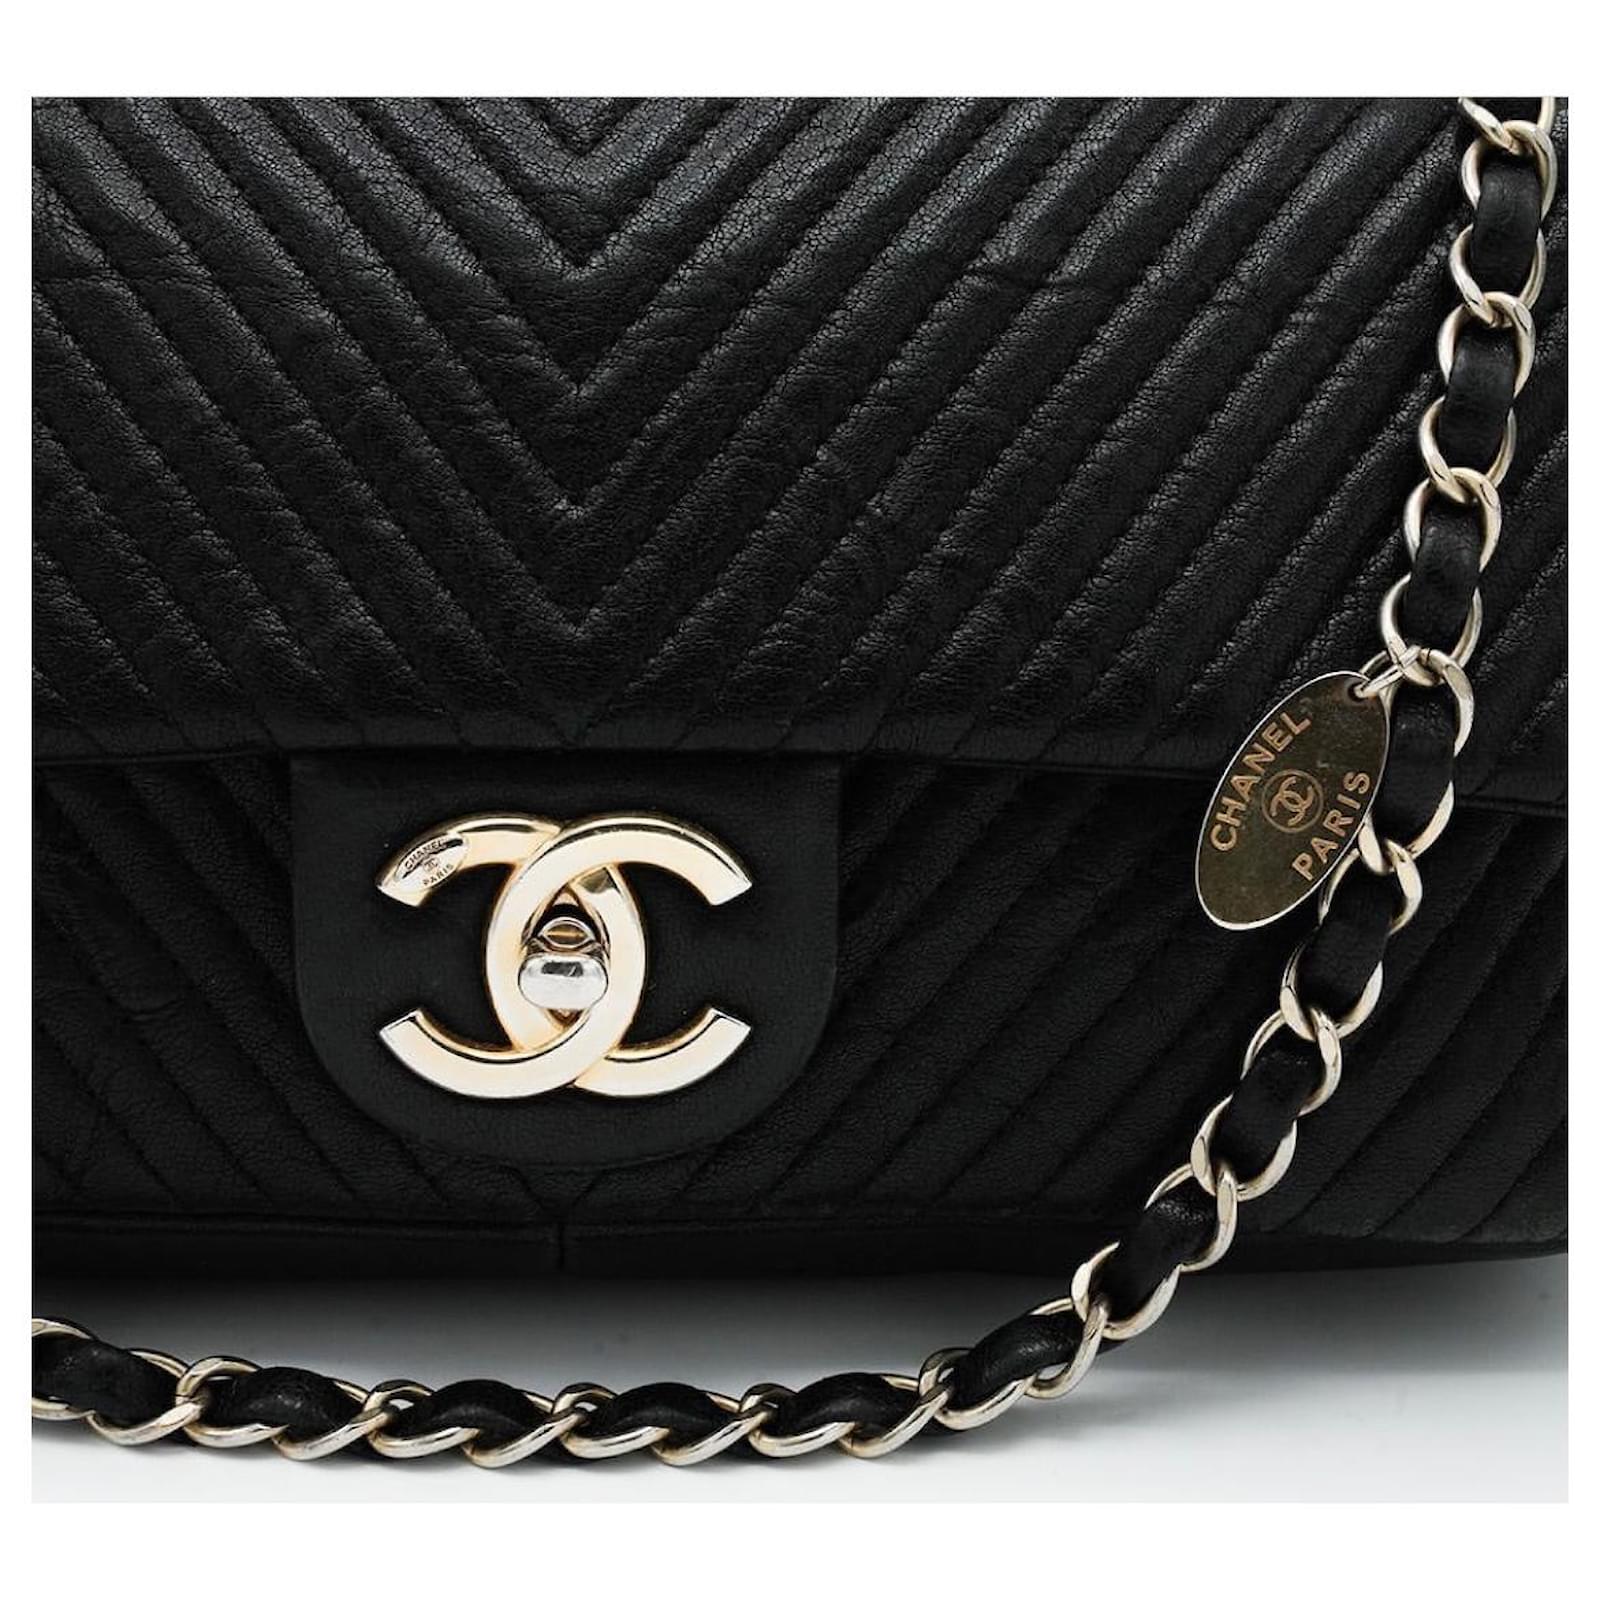 Chanel Chevron Surpique Medium Flap Bag